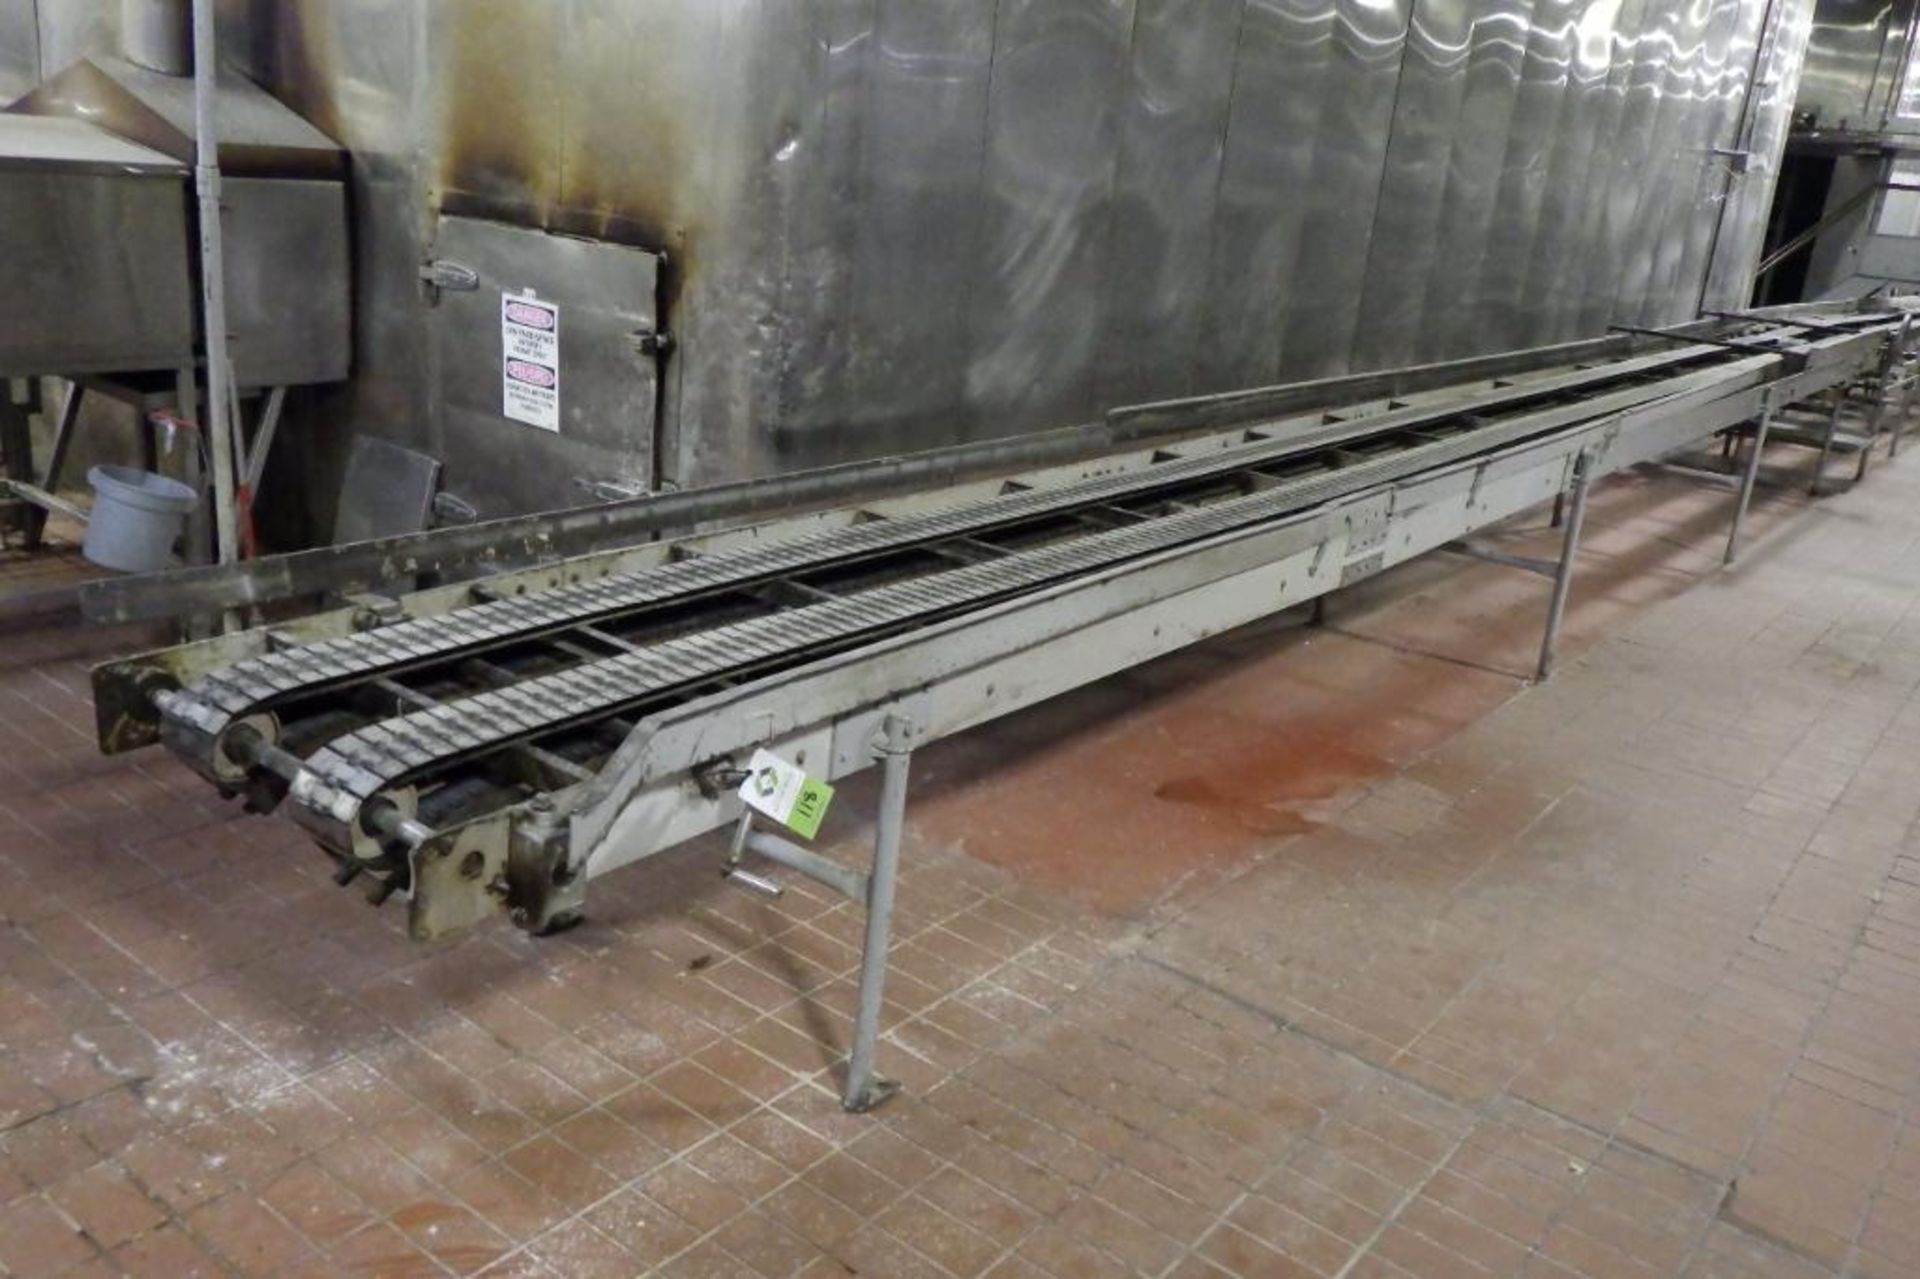 Stewart Systems pan conveyor